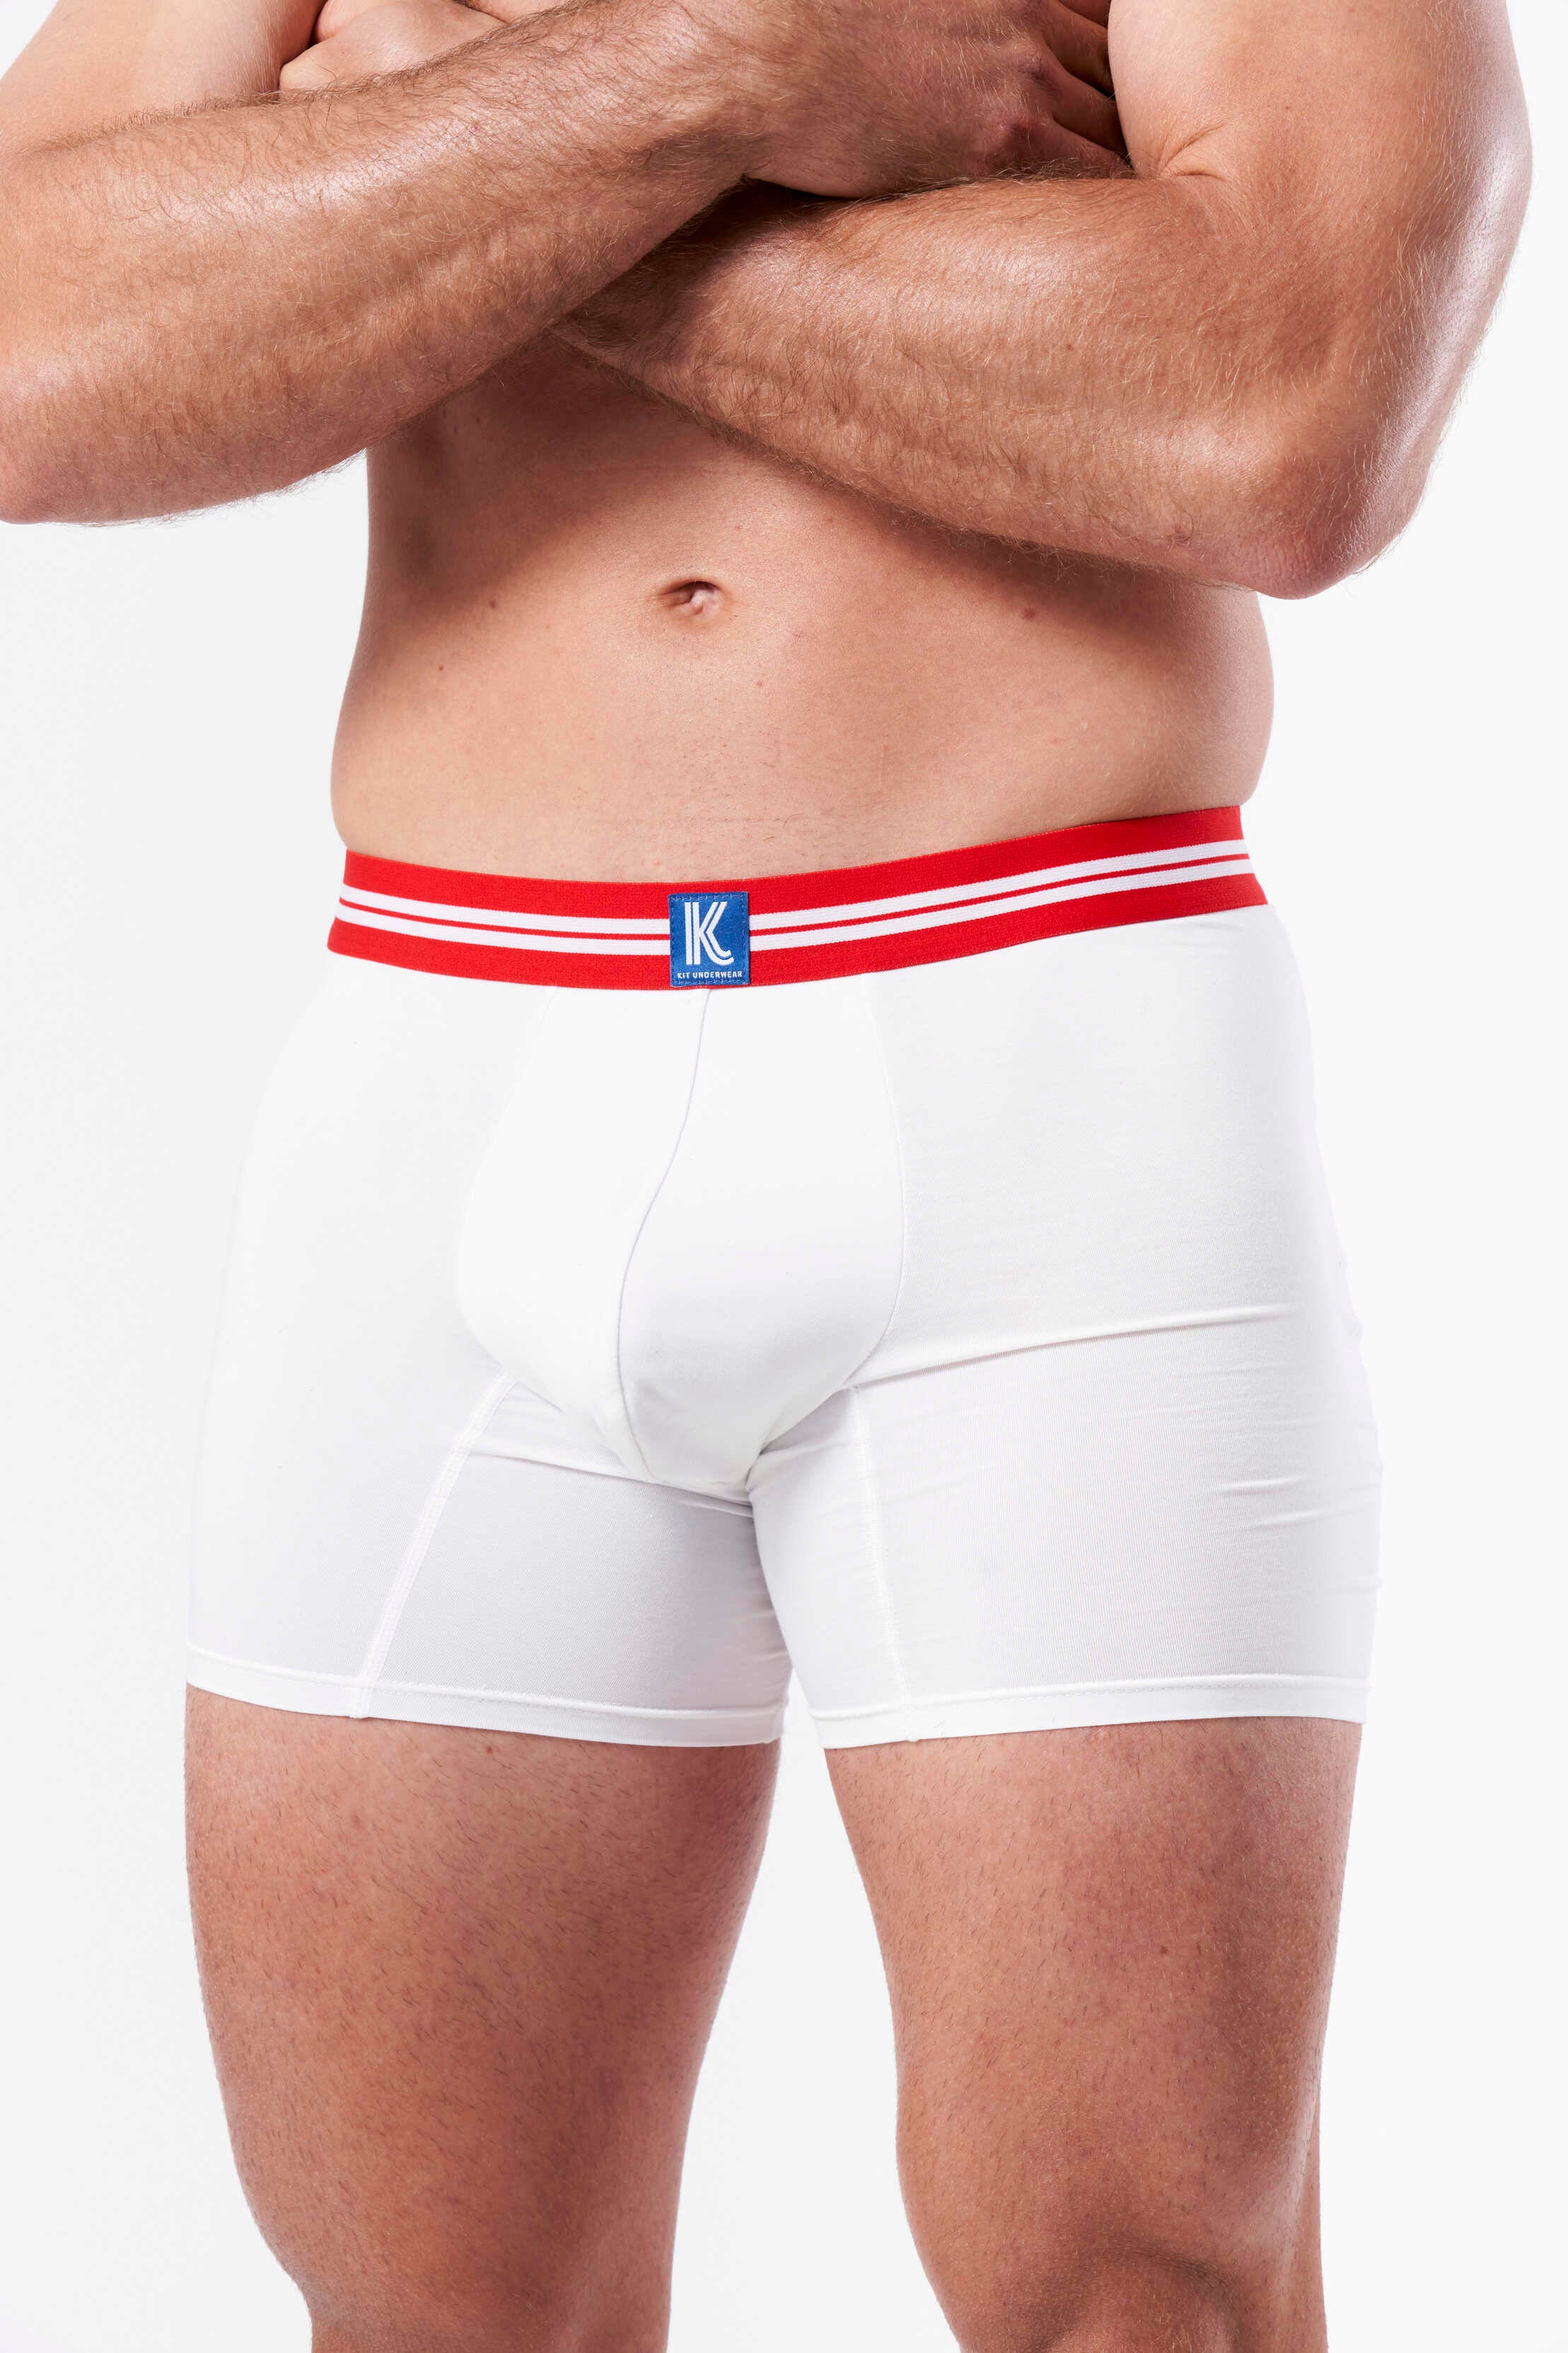 Nautica Men’s Size Small 3 Pack Cotton Woven Boxers Classic Fit Underwear  New